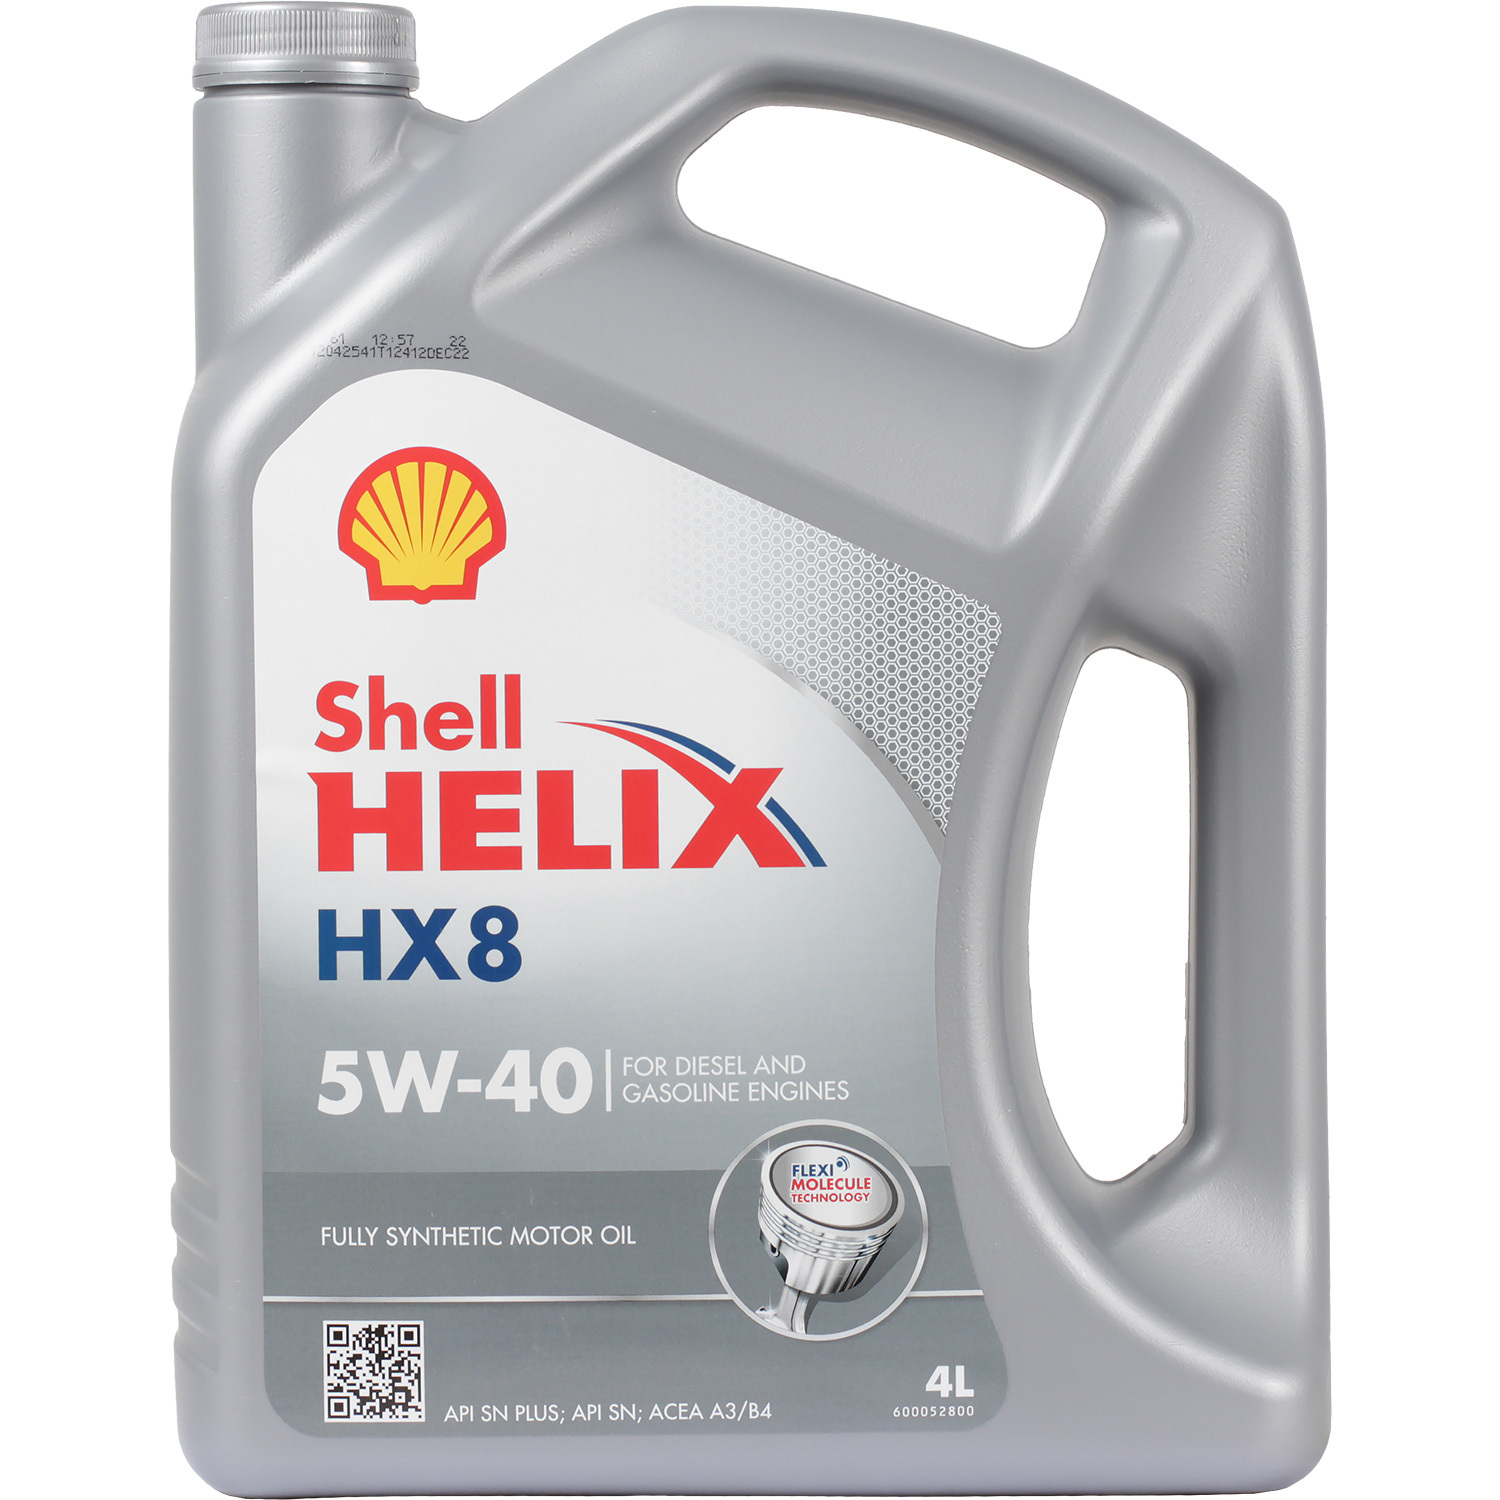 Shell Моторное масло Shell Helix HX8 5W-40, 4 л моторное масло shell helix hx8 ect 5w 30 4 л синтетическое